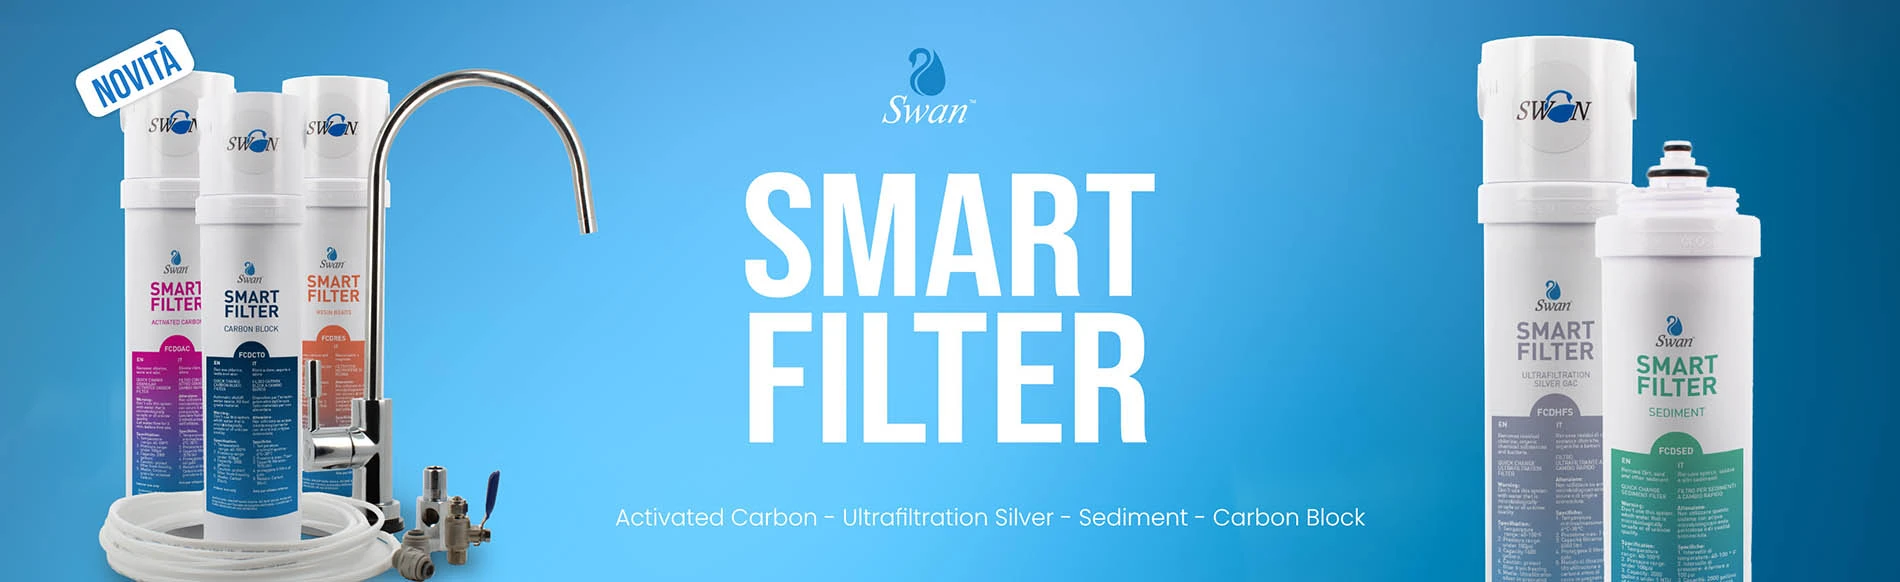 swan_smart_filters